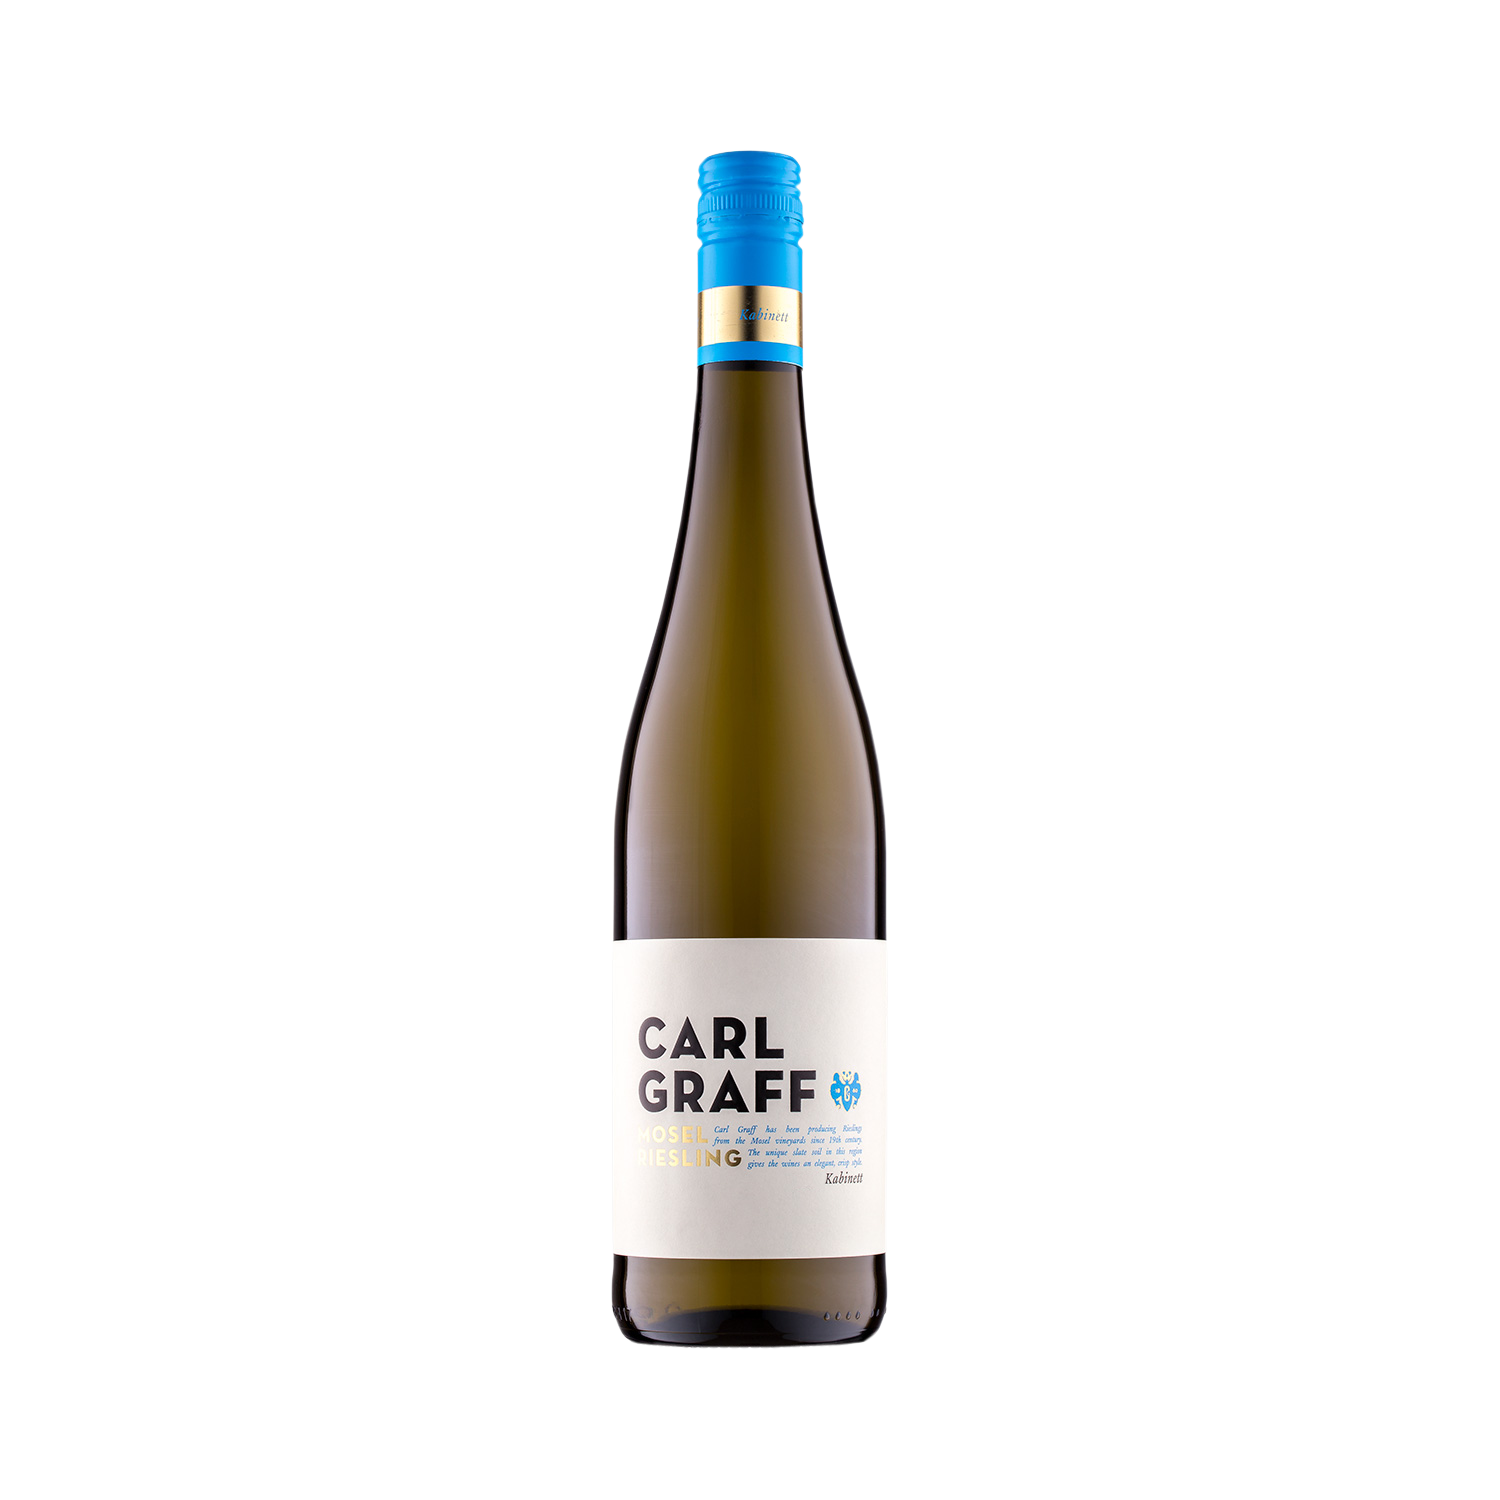 DEV2305-19 德國卡爾格拉夫酒莊麗絲玲珍藏白葡萄酒 Carl Graff Mosel Riesling Kabinett 